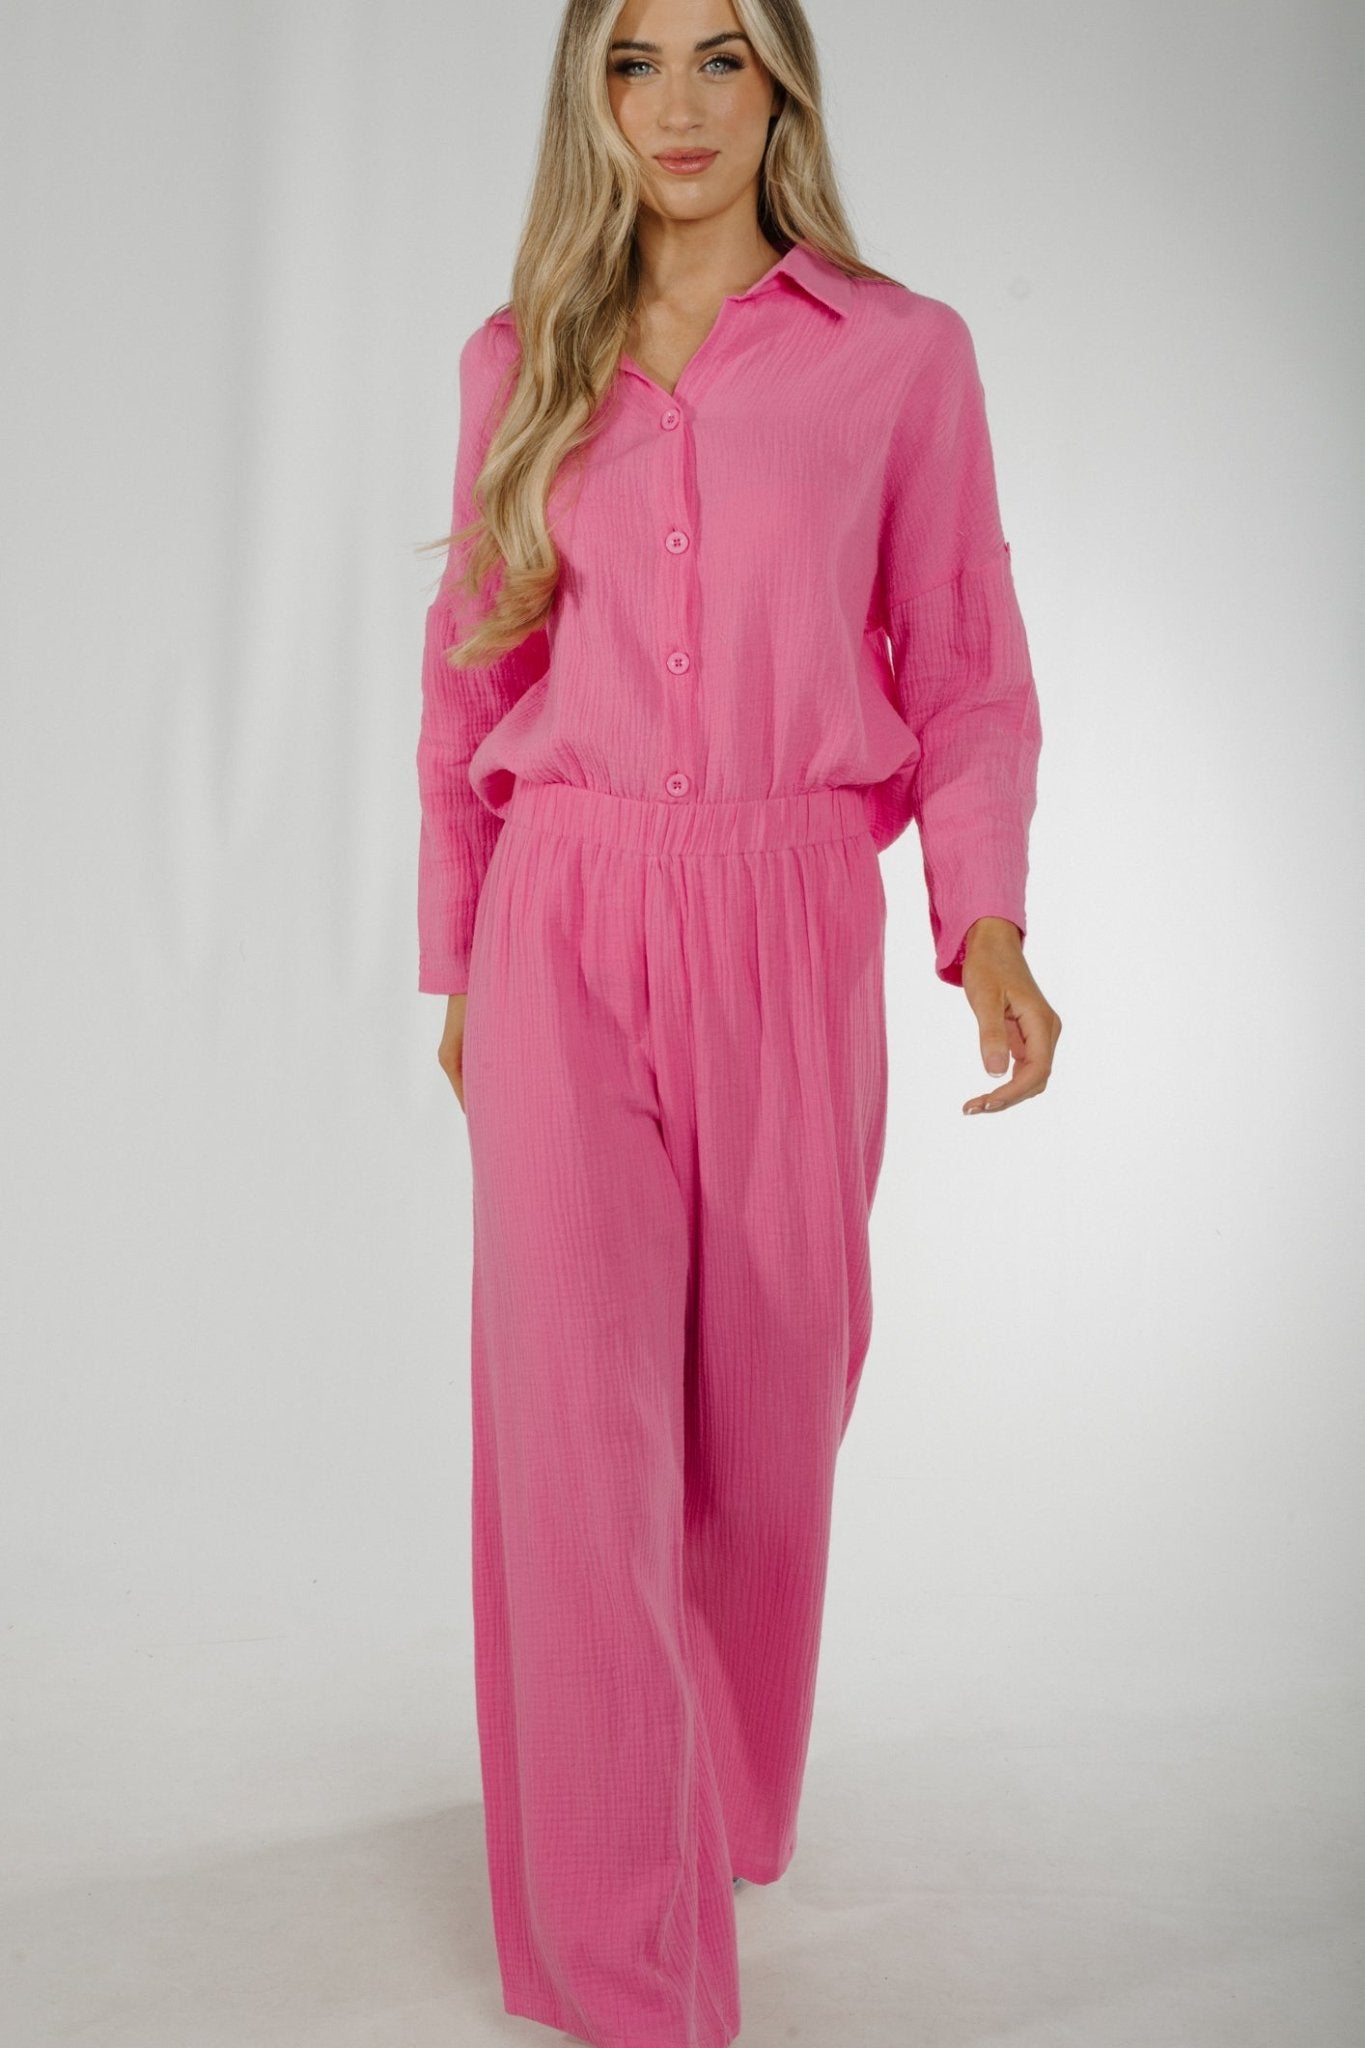 Jane Textured Two Piece In Pink - The Walk in Wardrobe